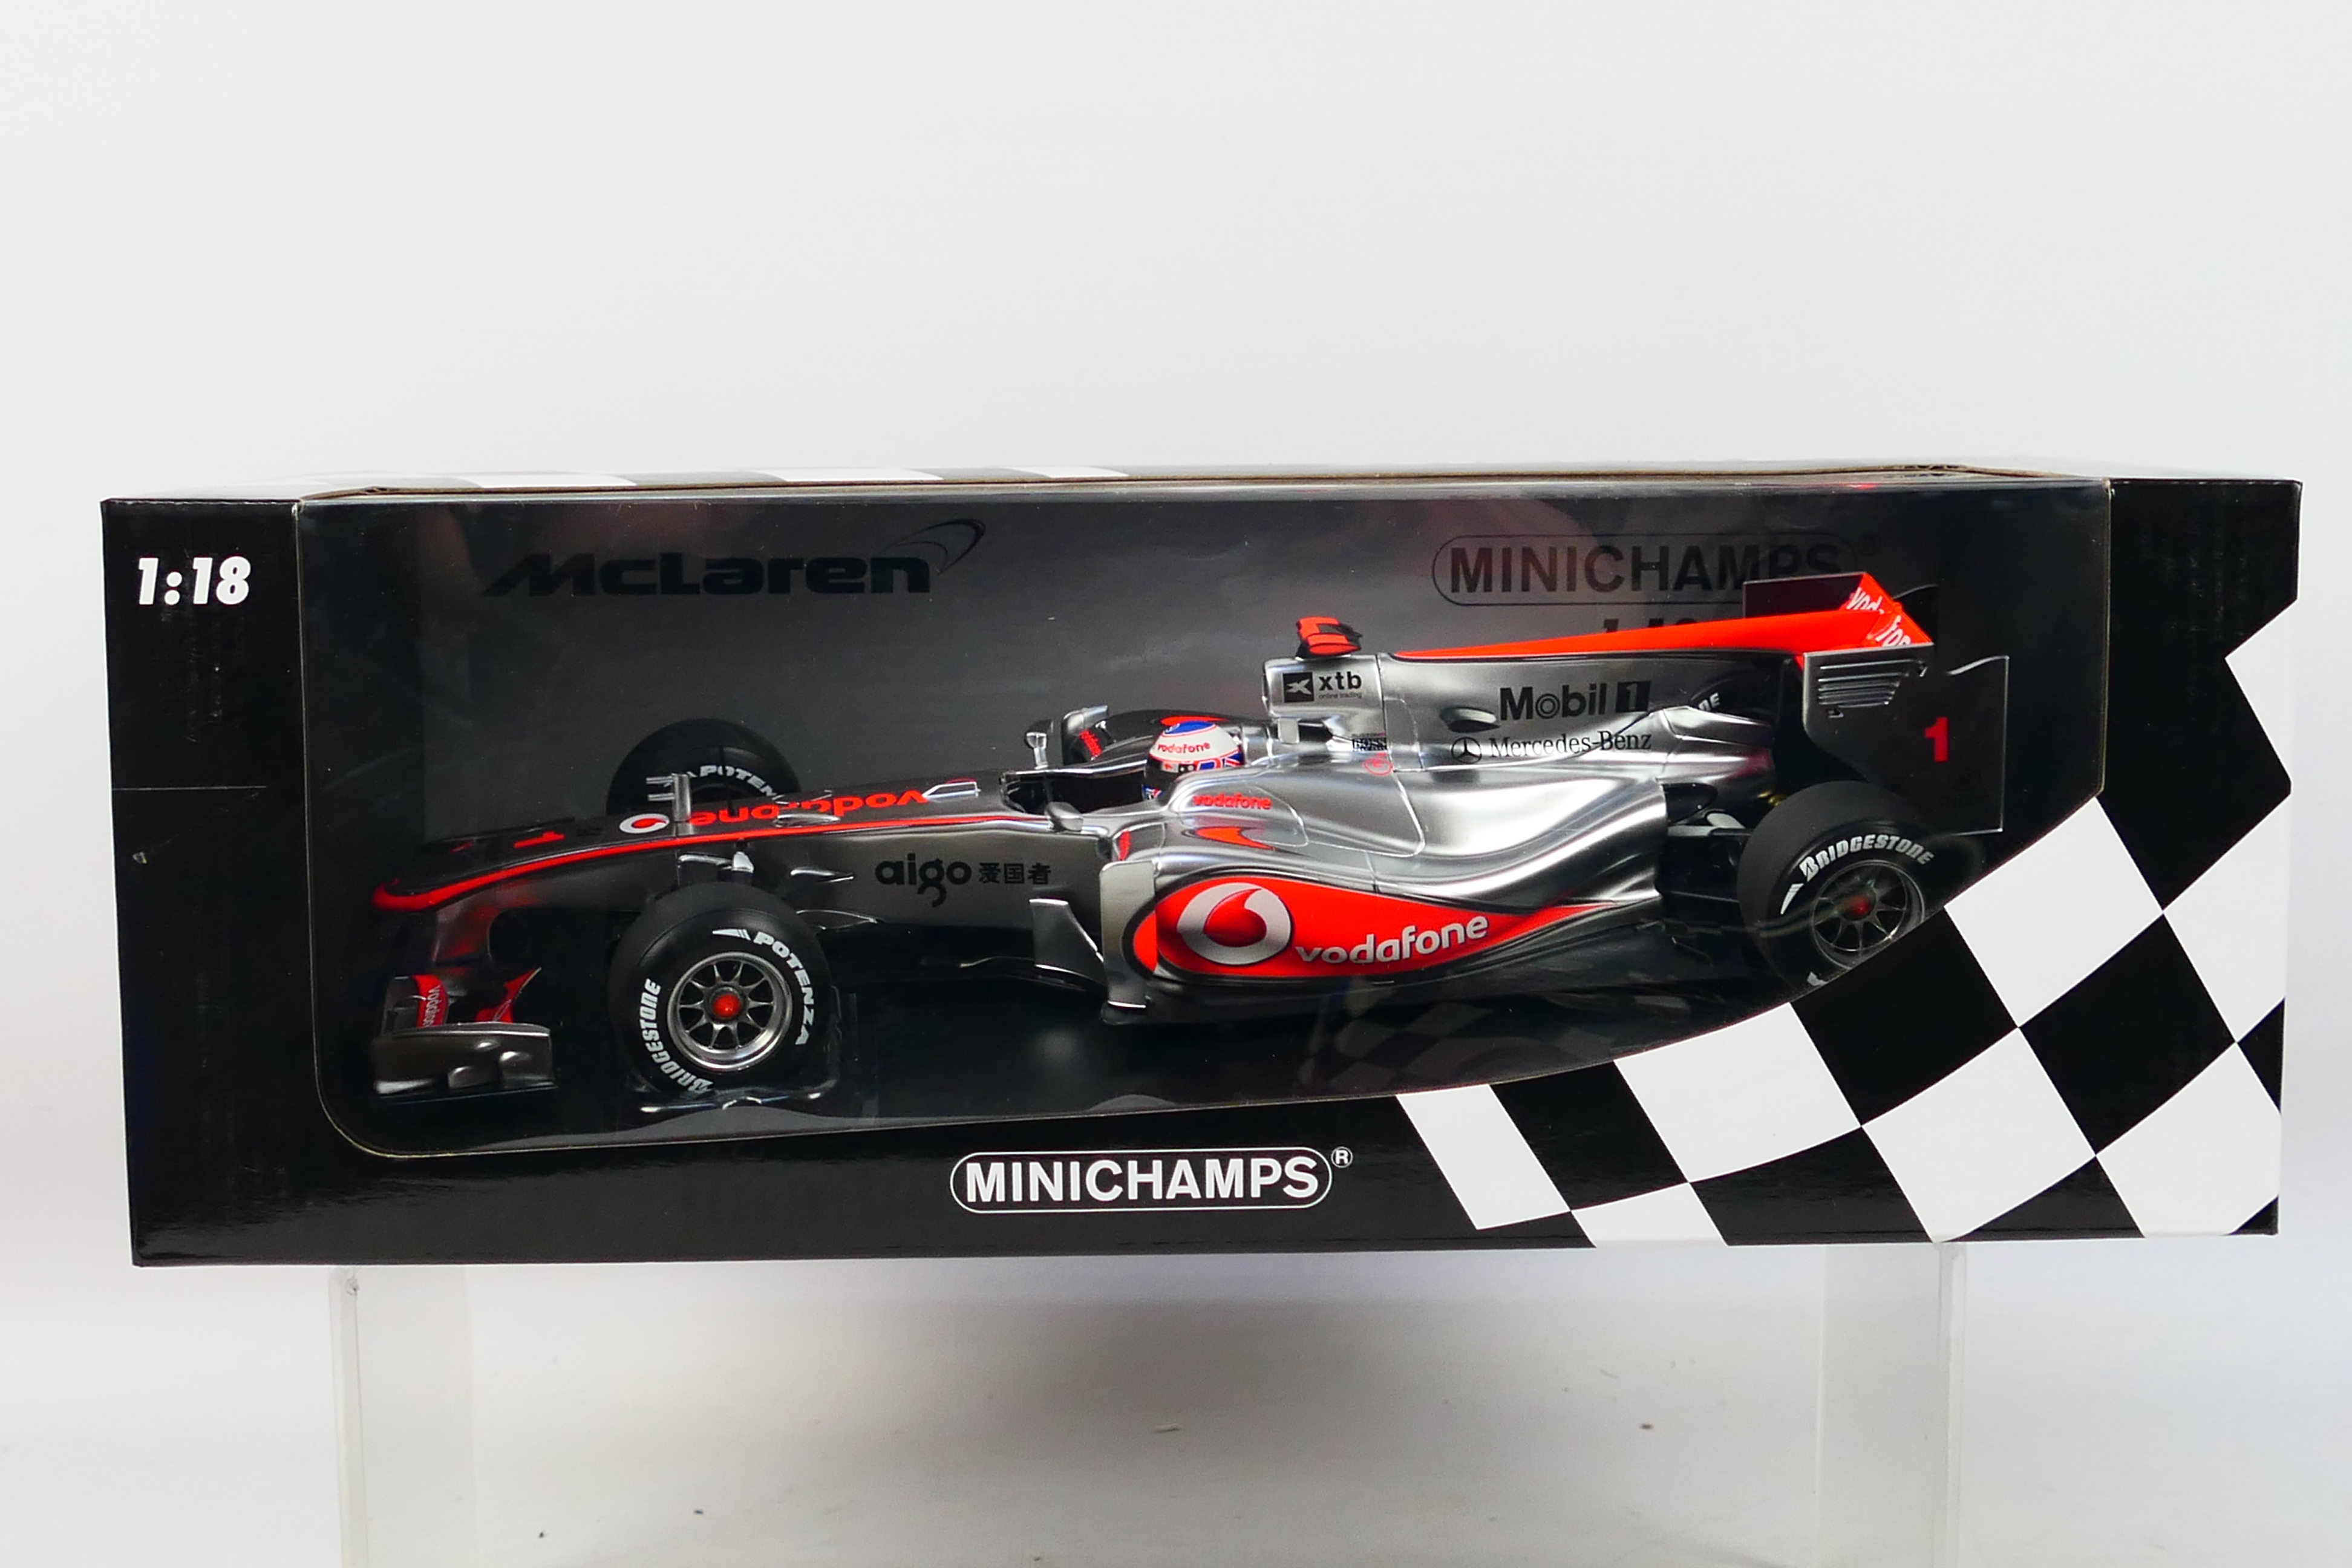 Minichamps- A boxed 1:18 scale McLaren Mercedes MP4-25 Jenson Button car which appears Mint in a